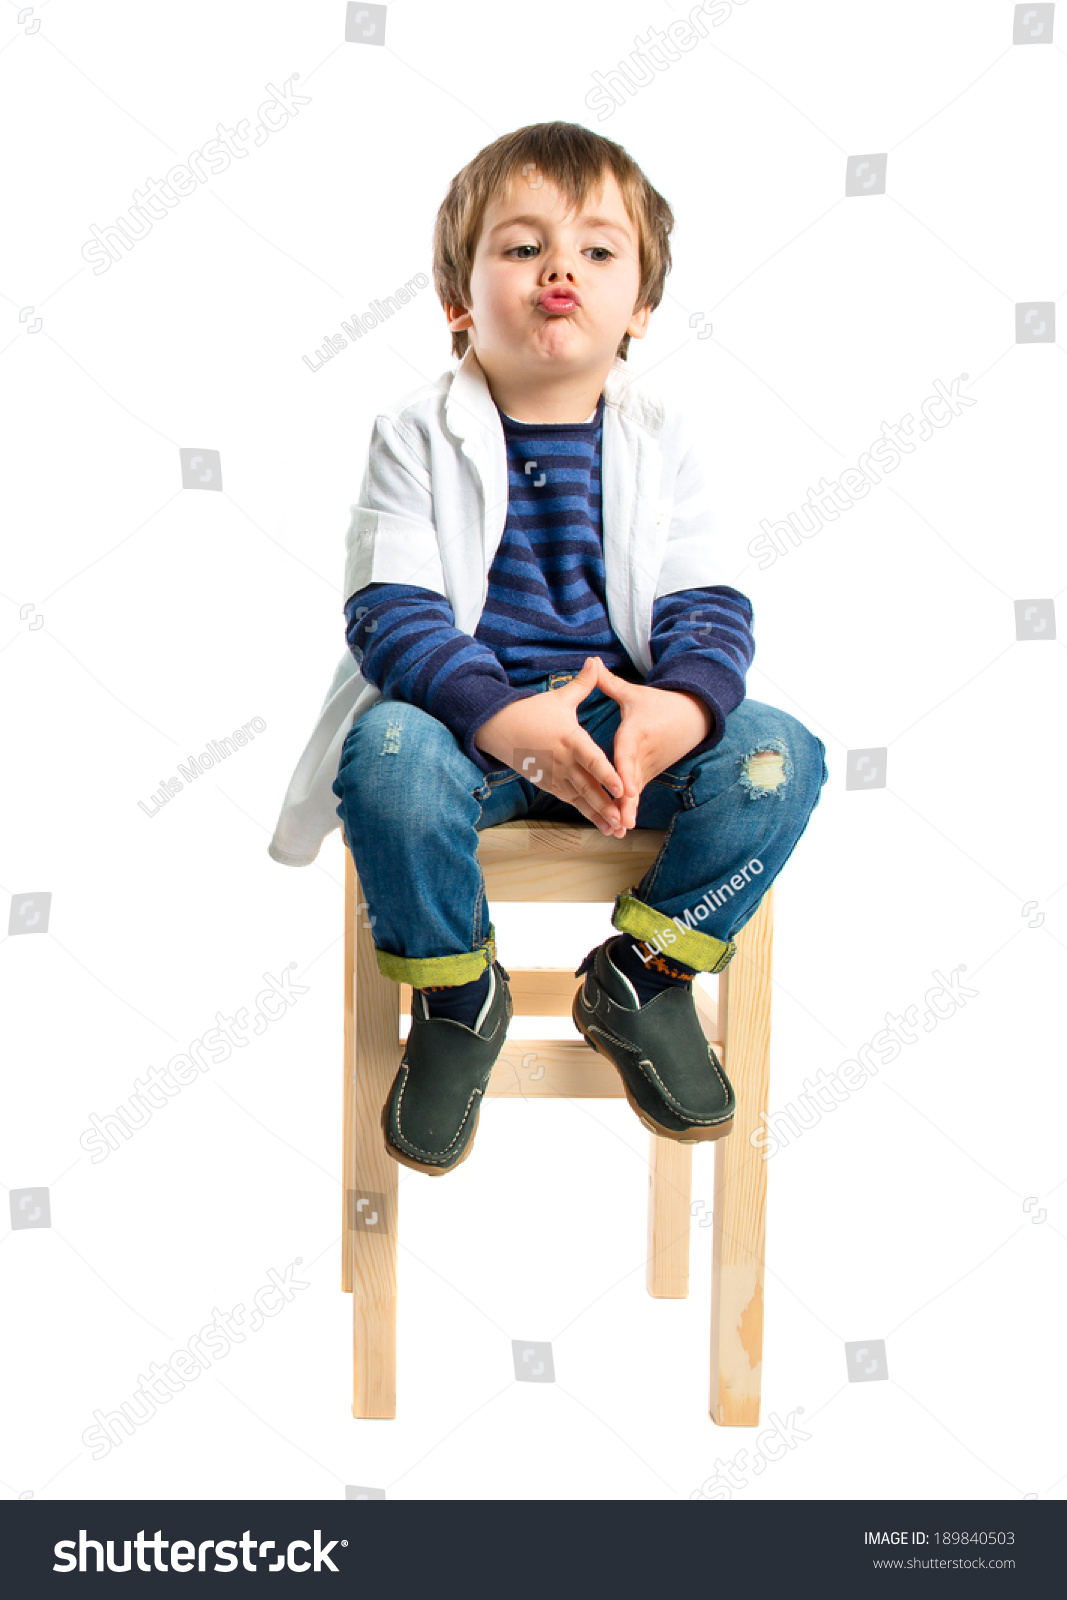 Interesting Kid Sit On Wooden Chair Stock Photo 189840503 - Shutterstock